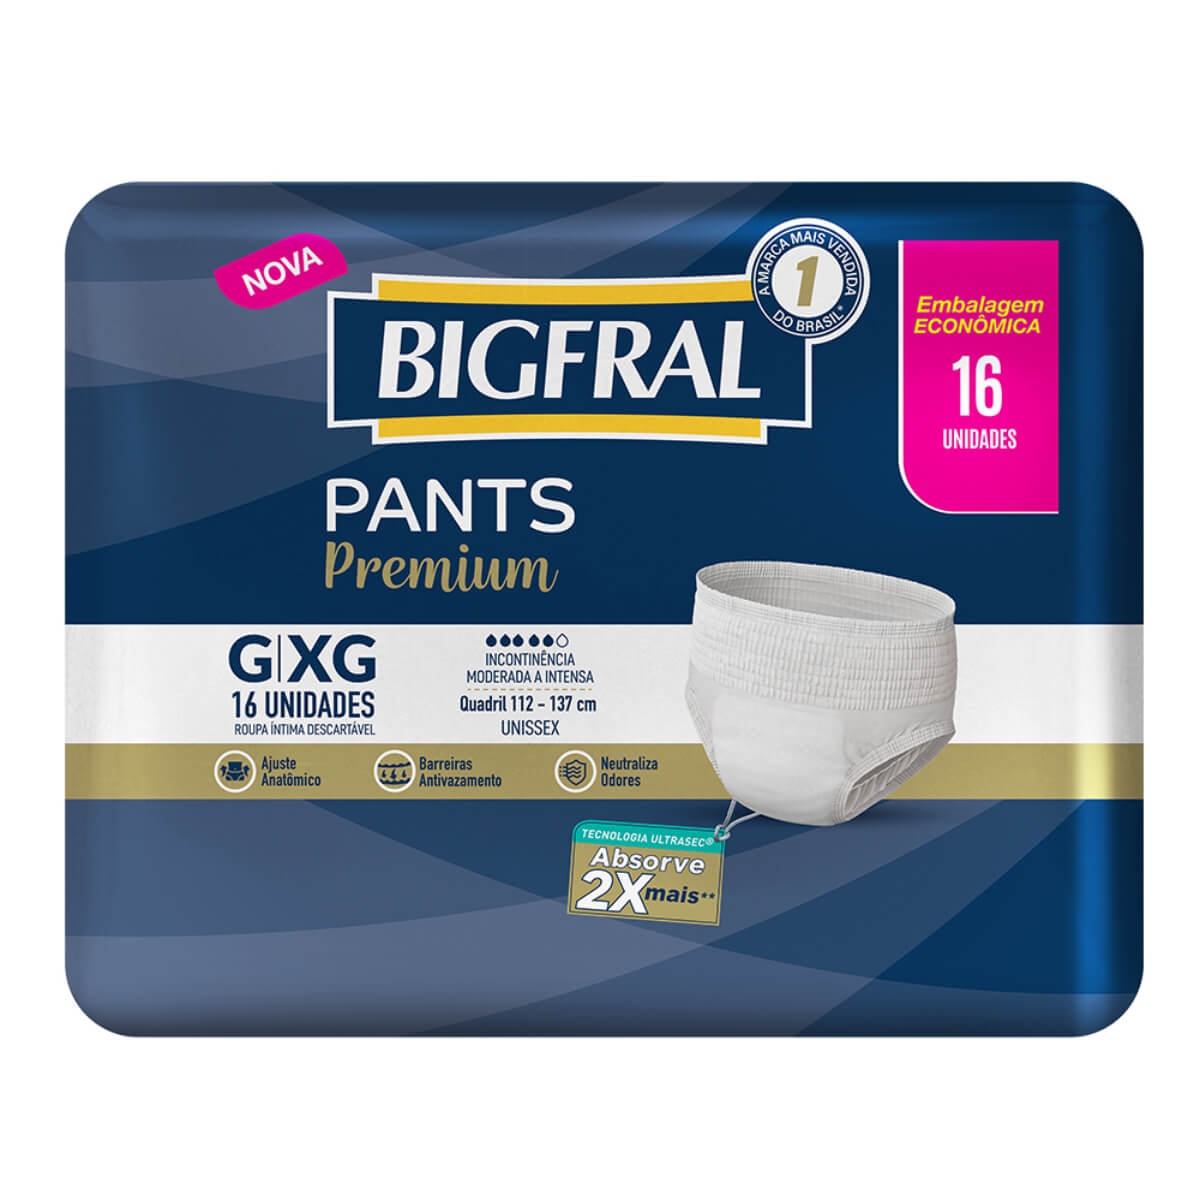 Roupa Íntima Bigfral Pants Premium Tamanho G/XG 16 Unidades